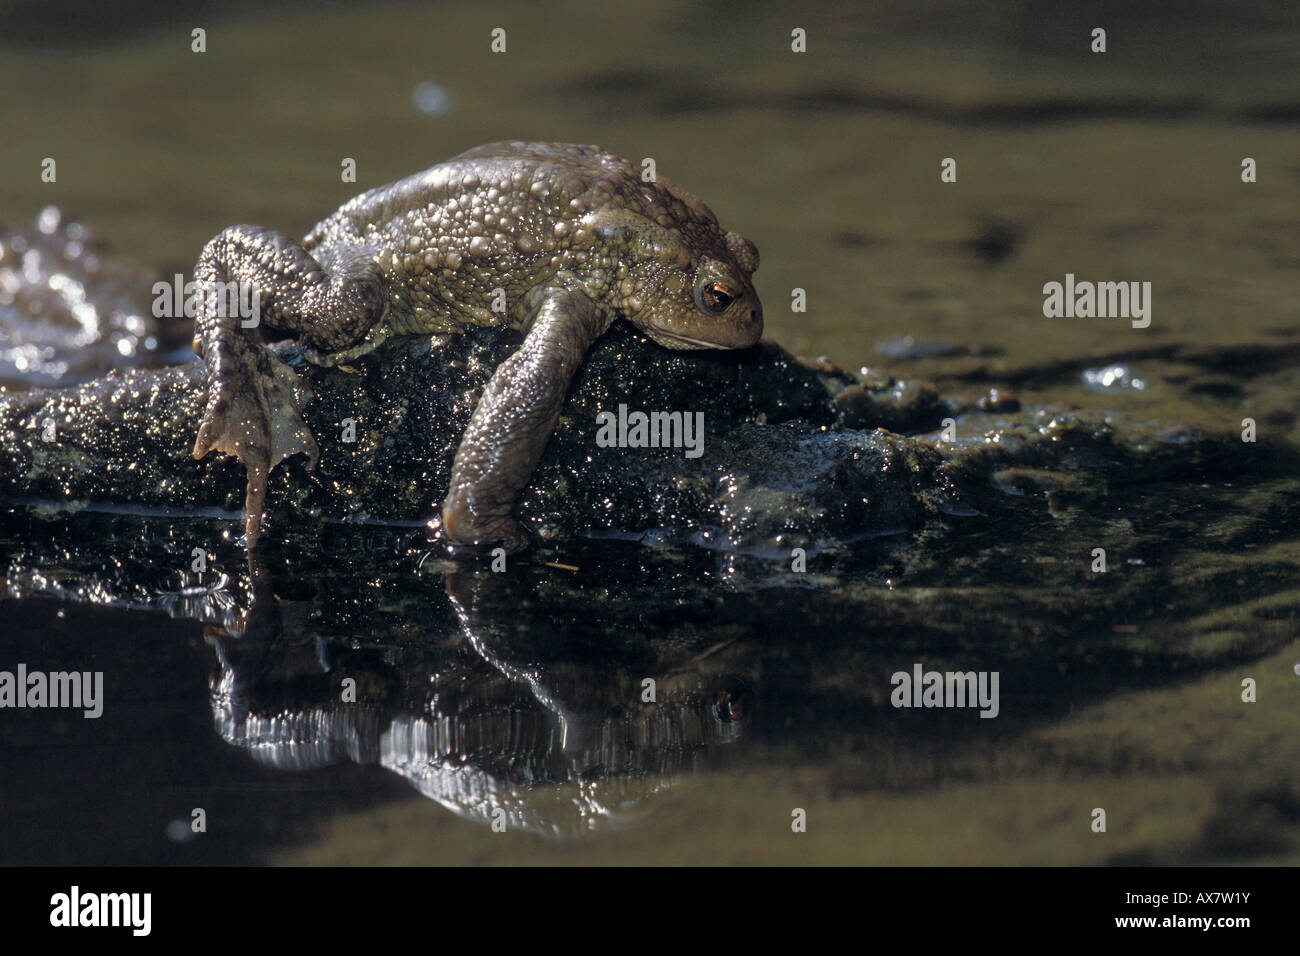 common toad mating root coupling anfibian water pond bog fen lake rospo comune accoppiamento radice anfibi anuri acqua stagno pa Stock Photo